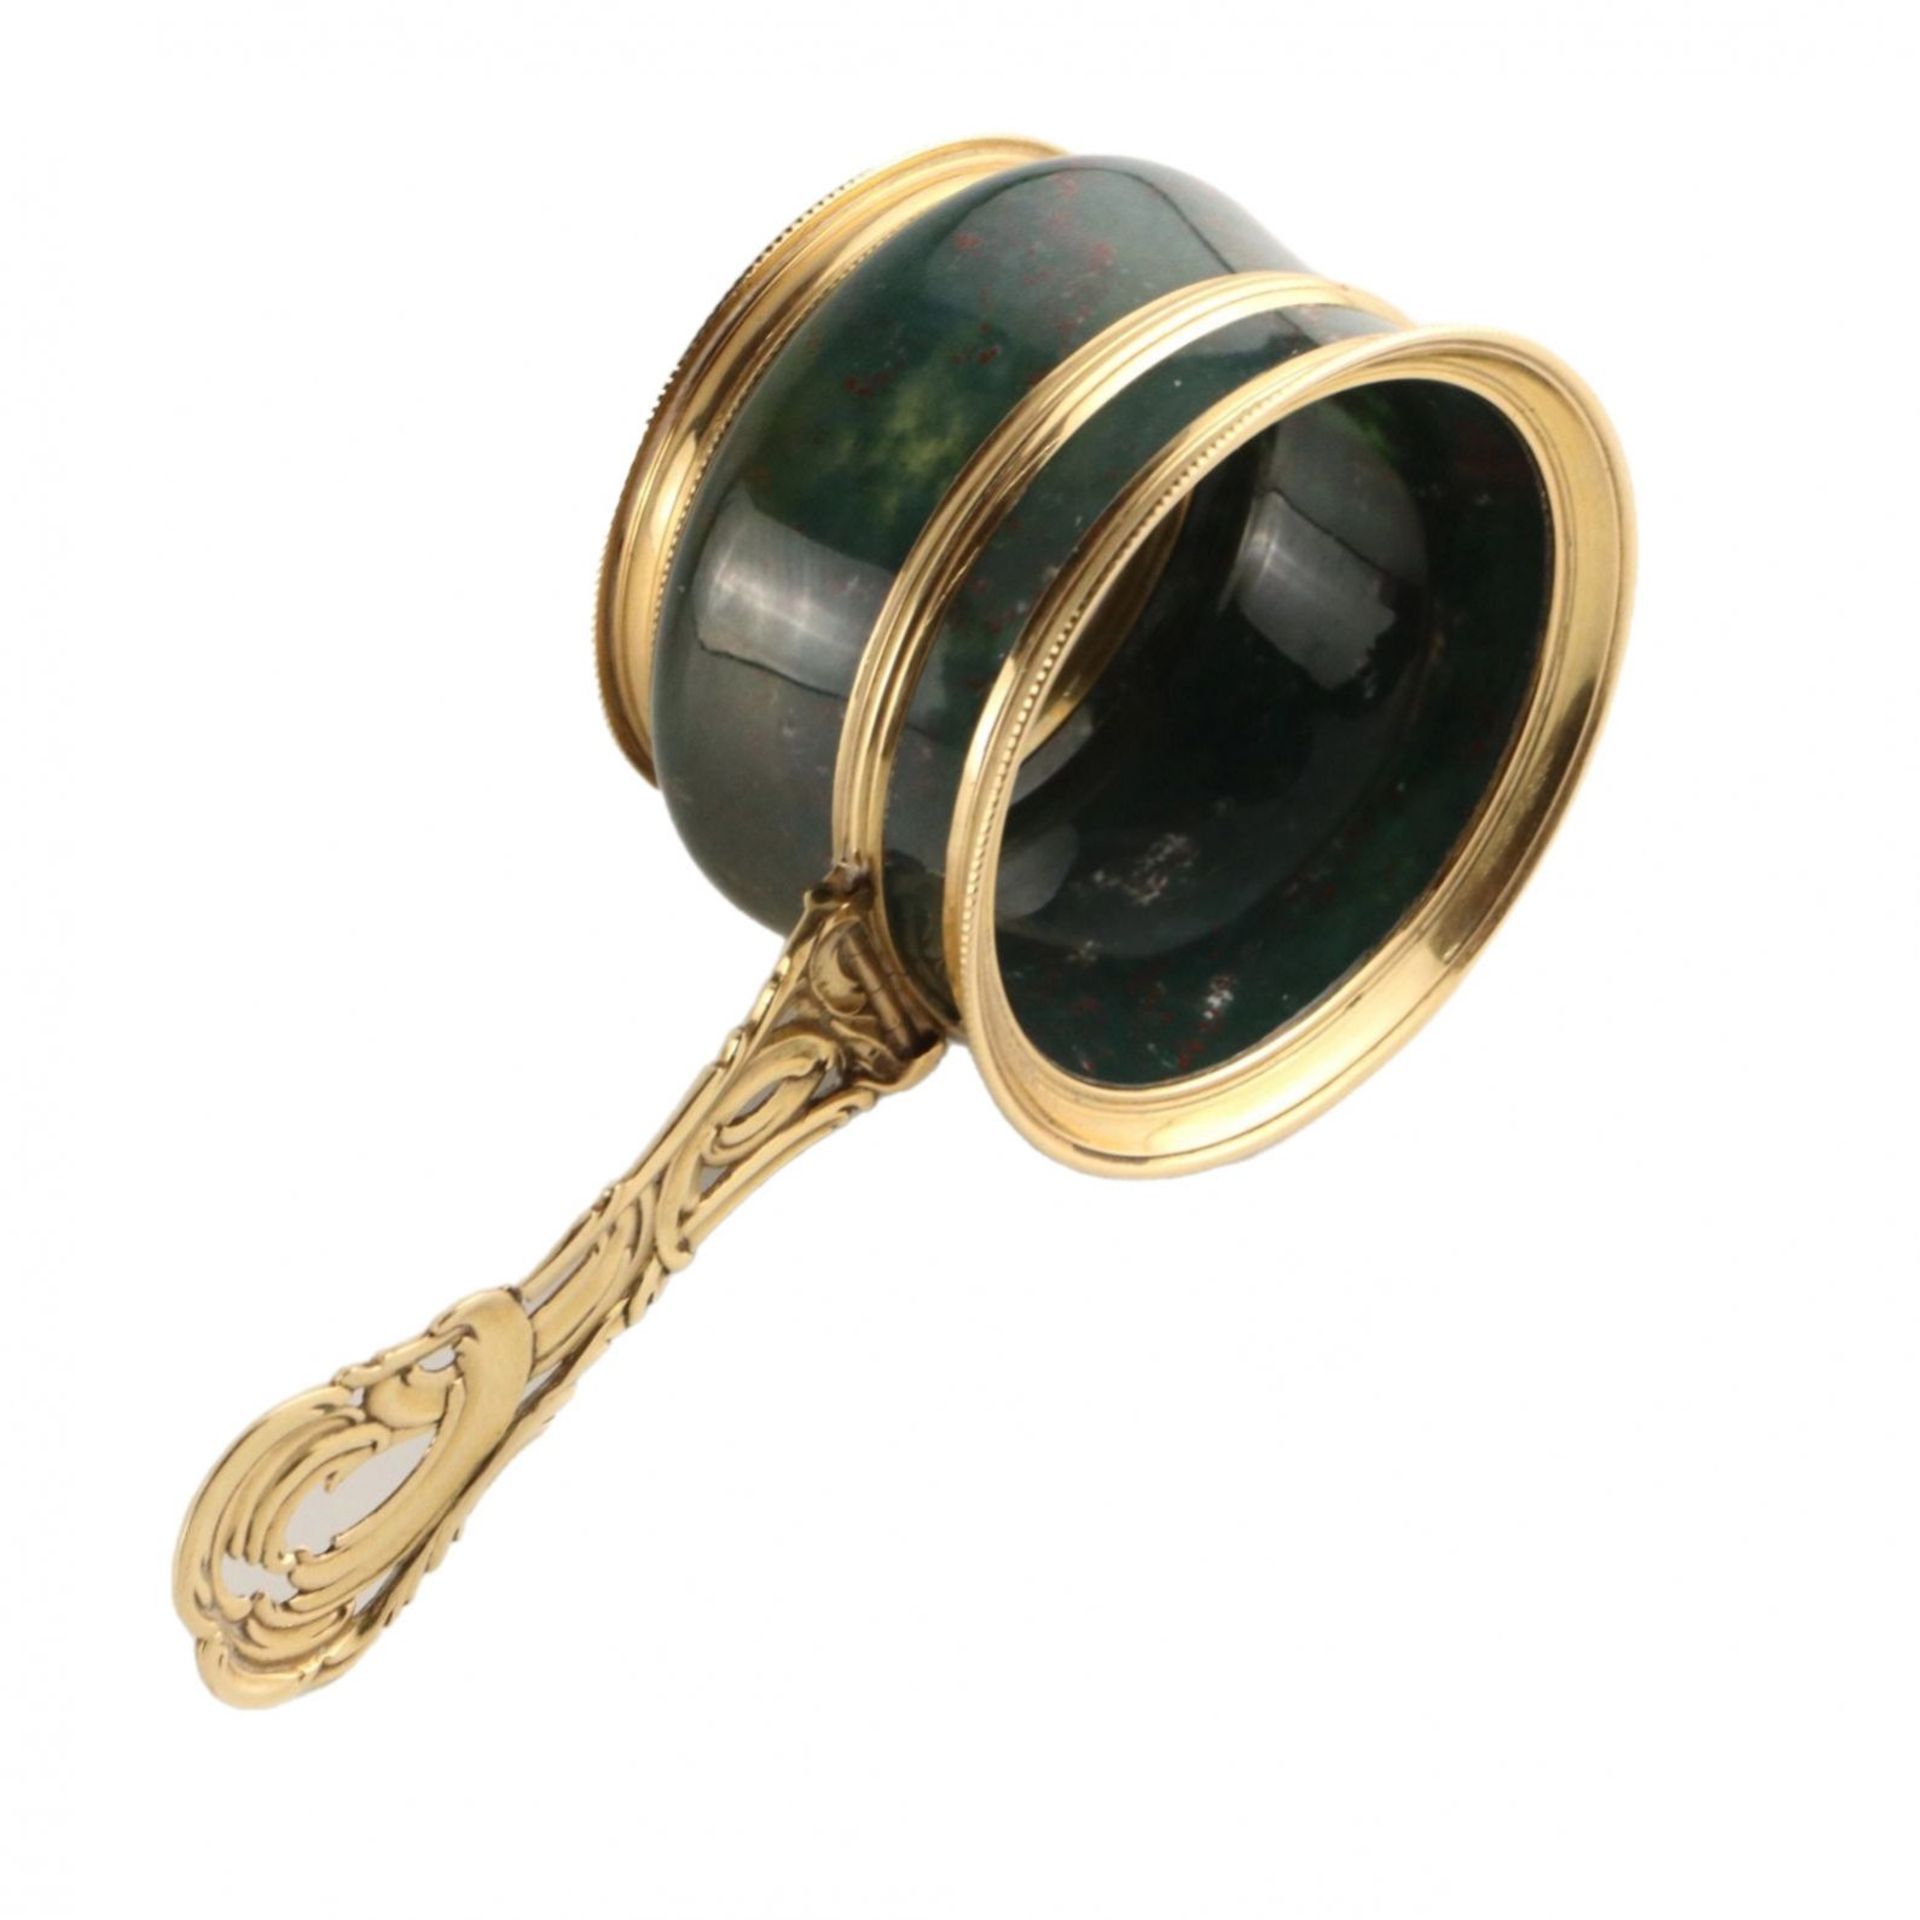 Gold rimmed magnifier. - Image 2 of 6